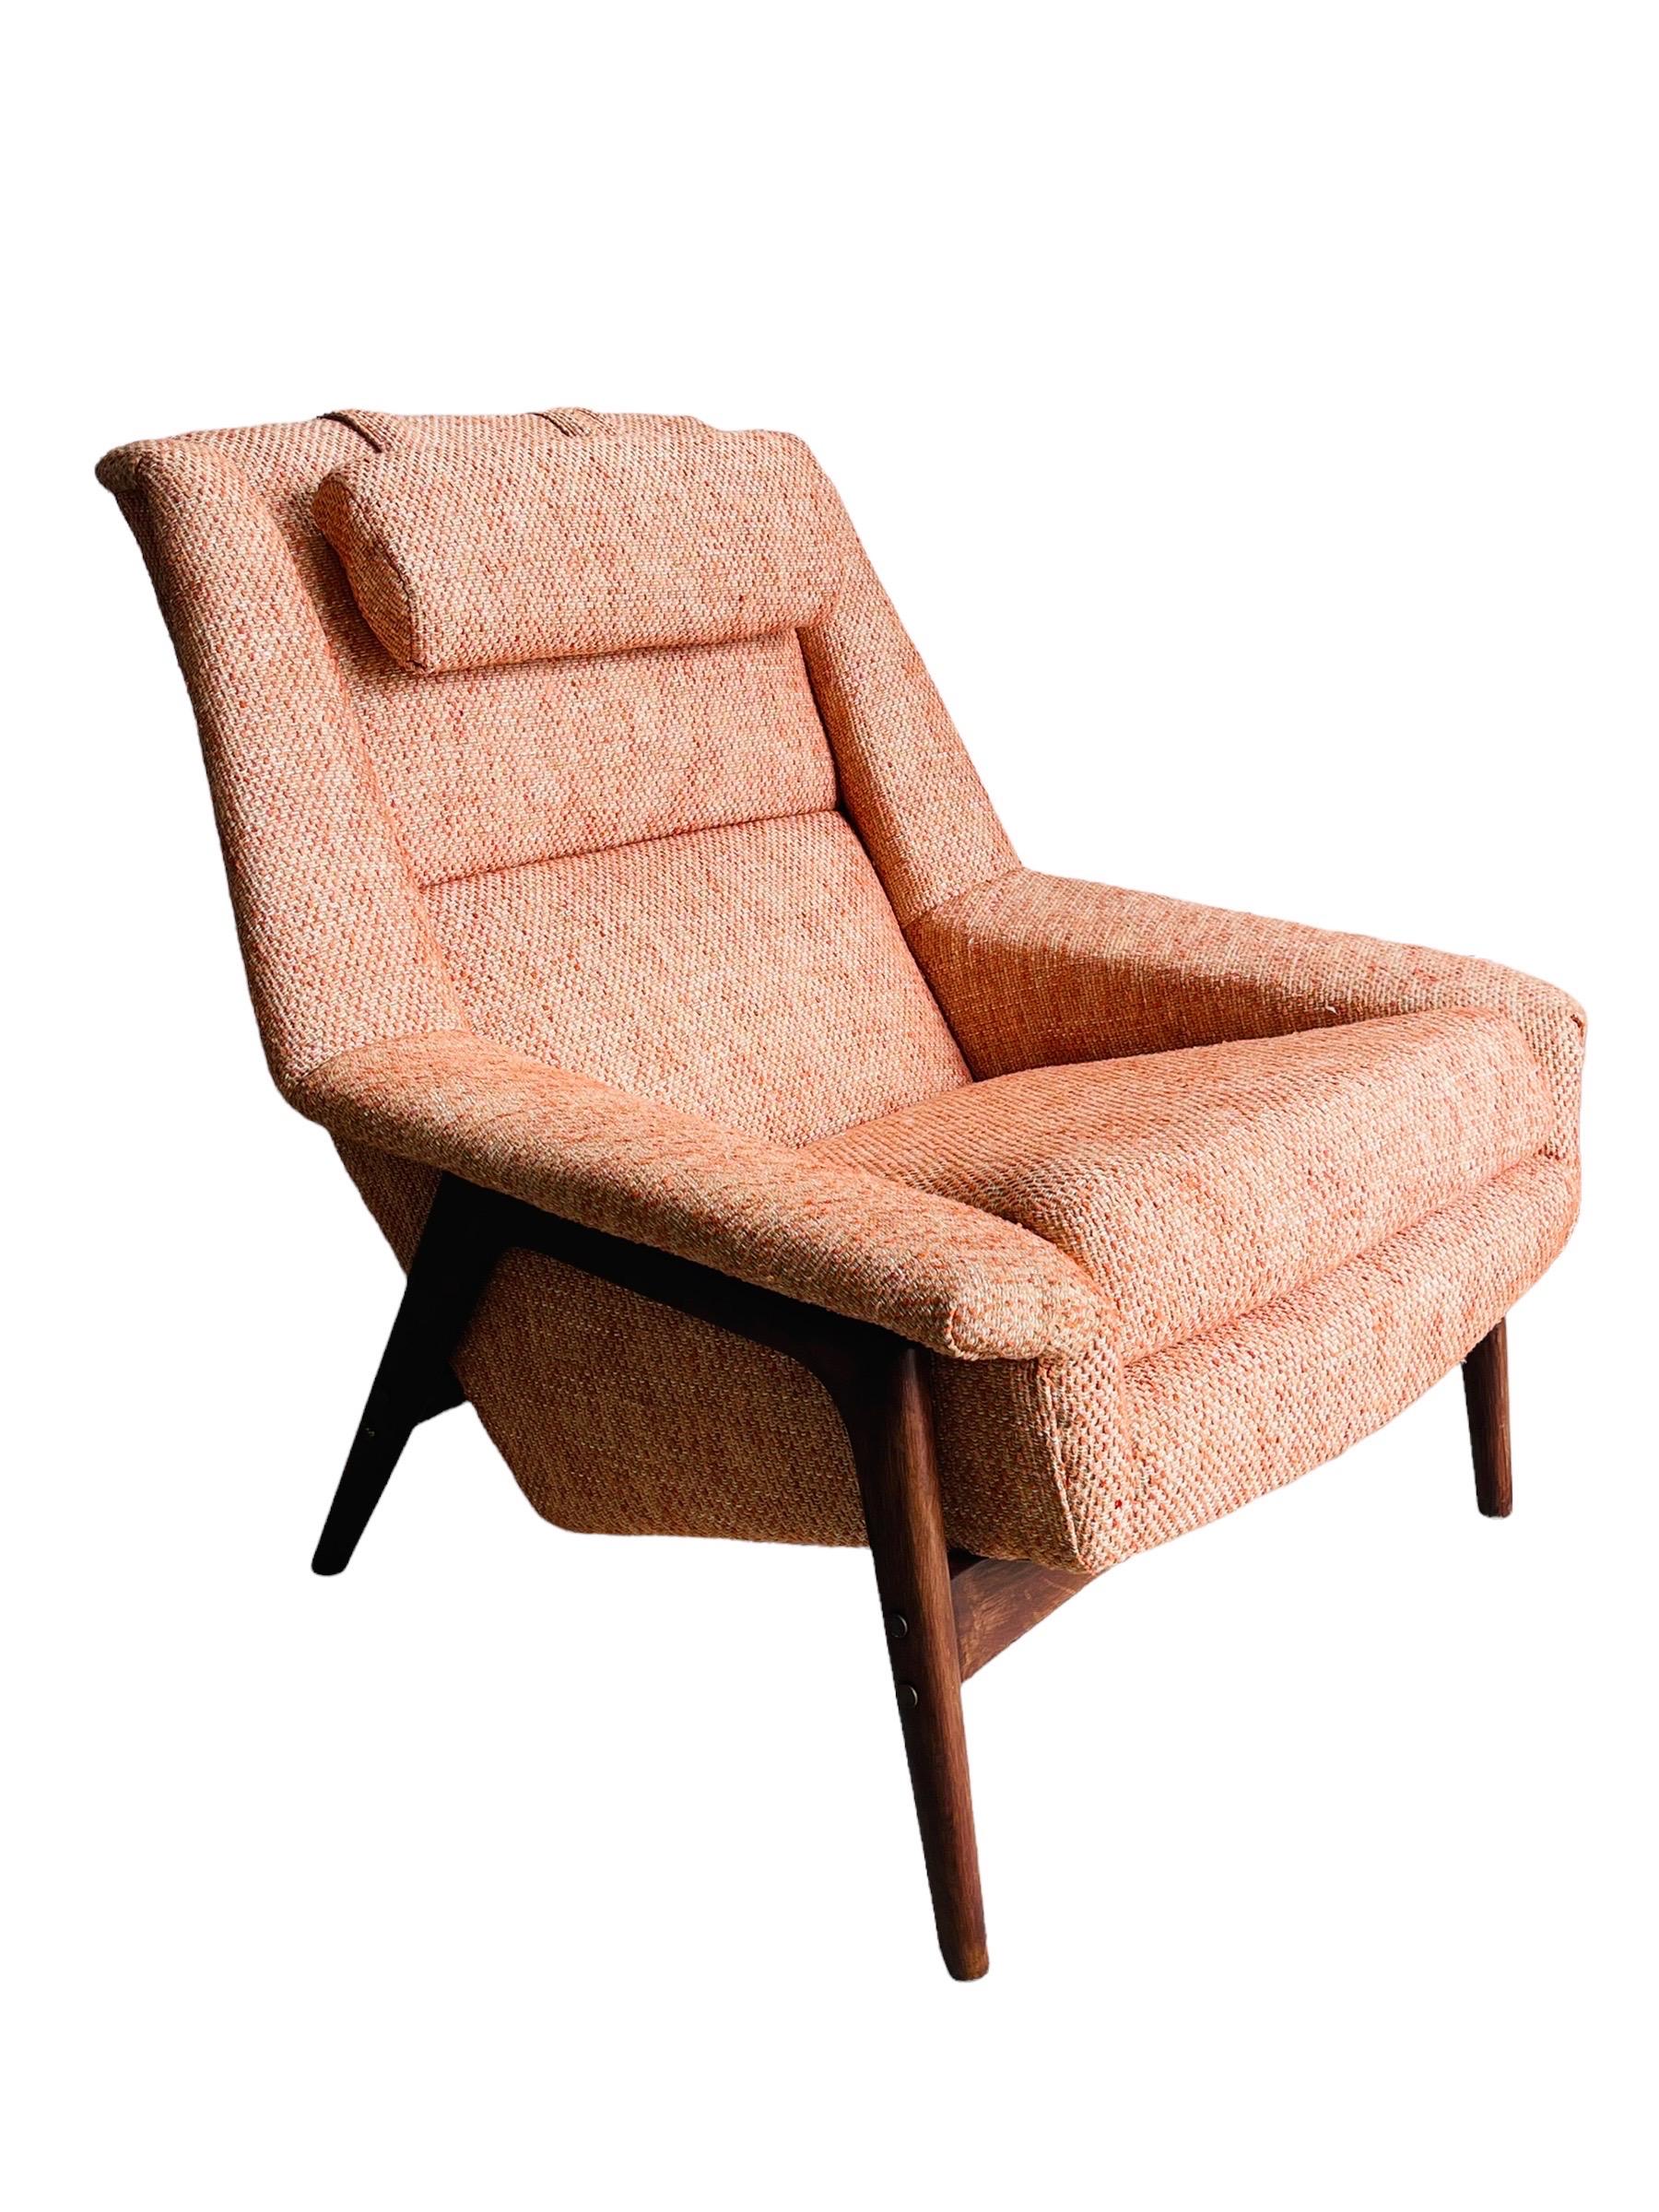 Folke Ohlsson Walnut Lounge Chair & Ottoman for DUX 5